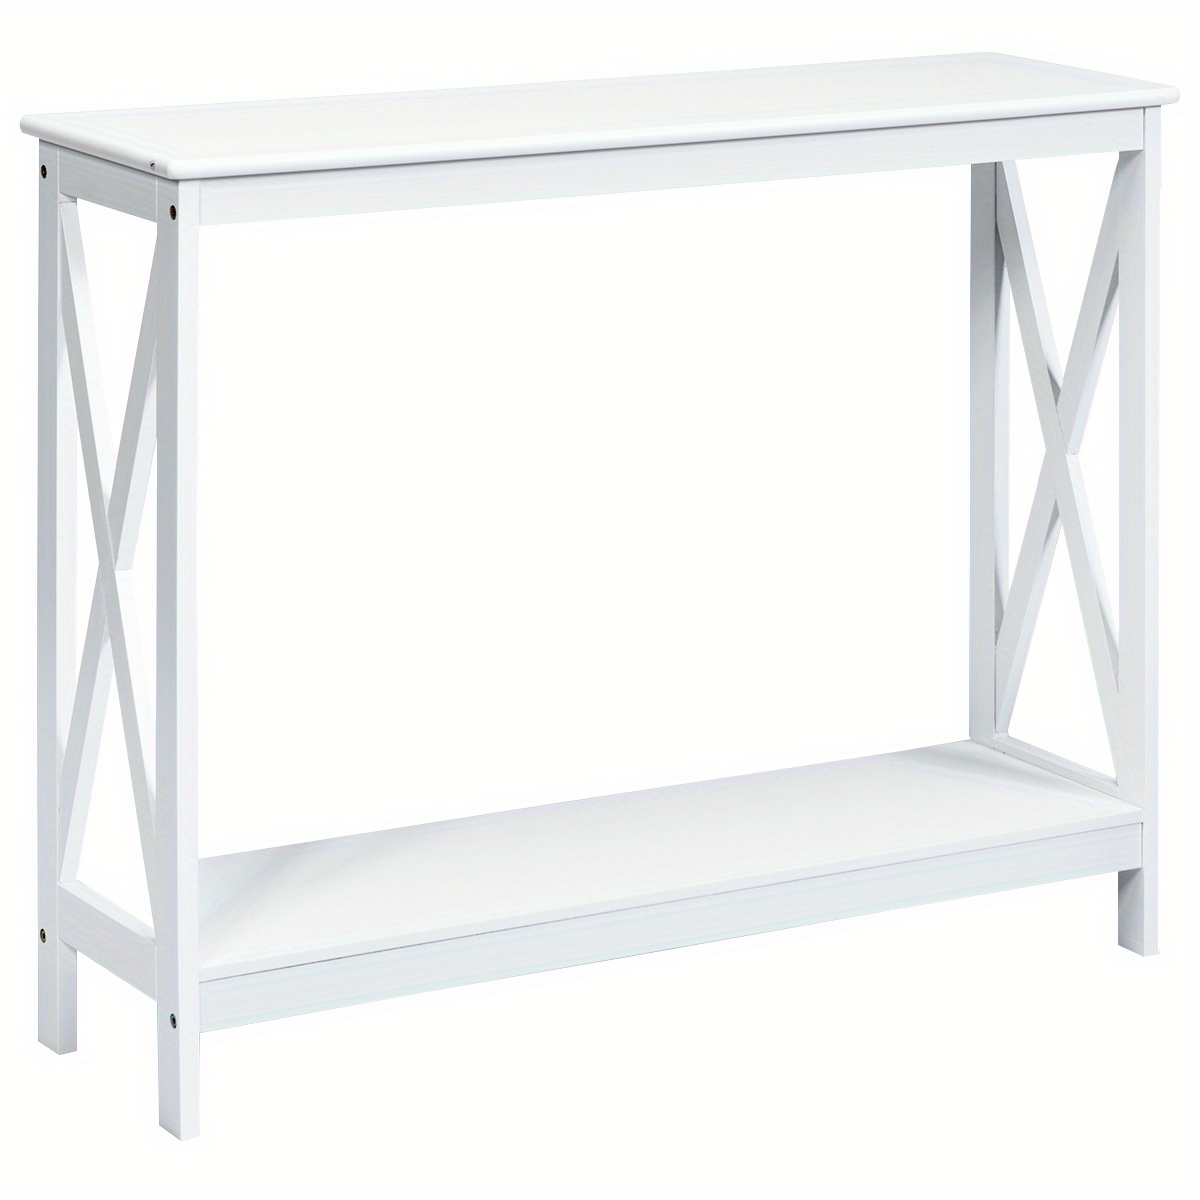 

Maxmass 2-tier Console Table X-design Bookshelf Sofa Side Accent Table W/shelf White